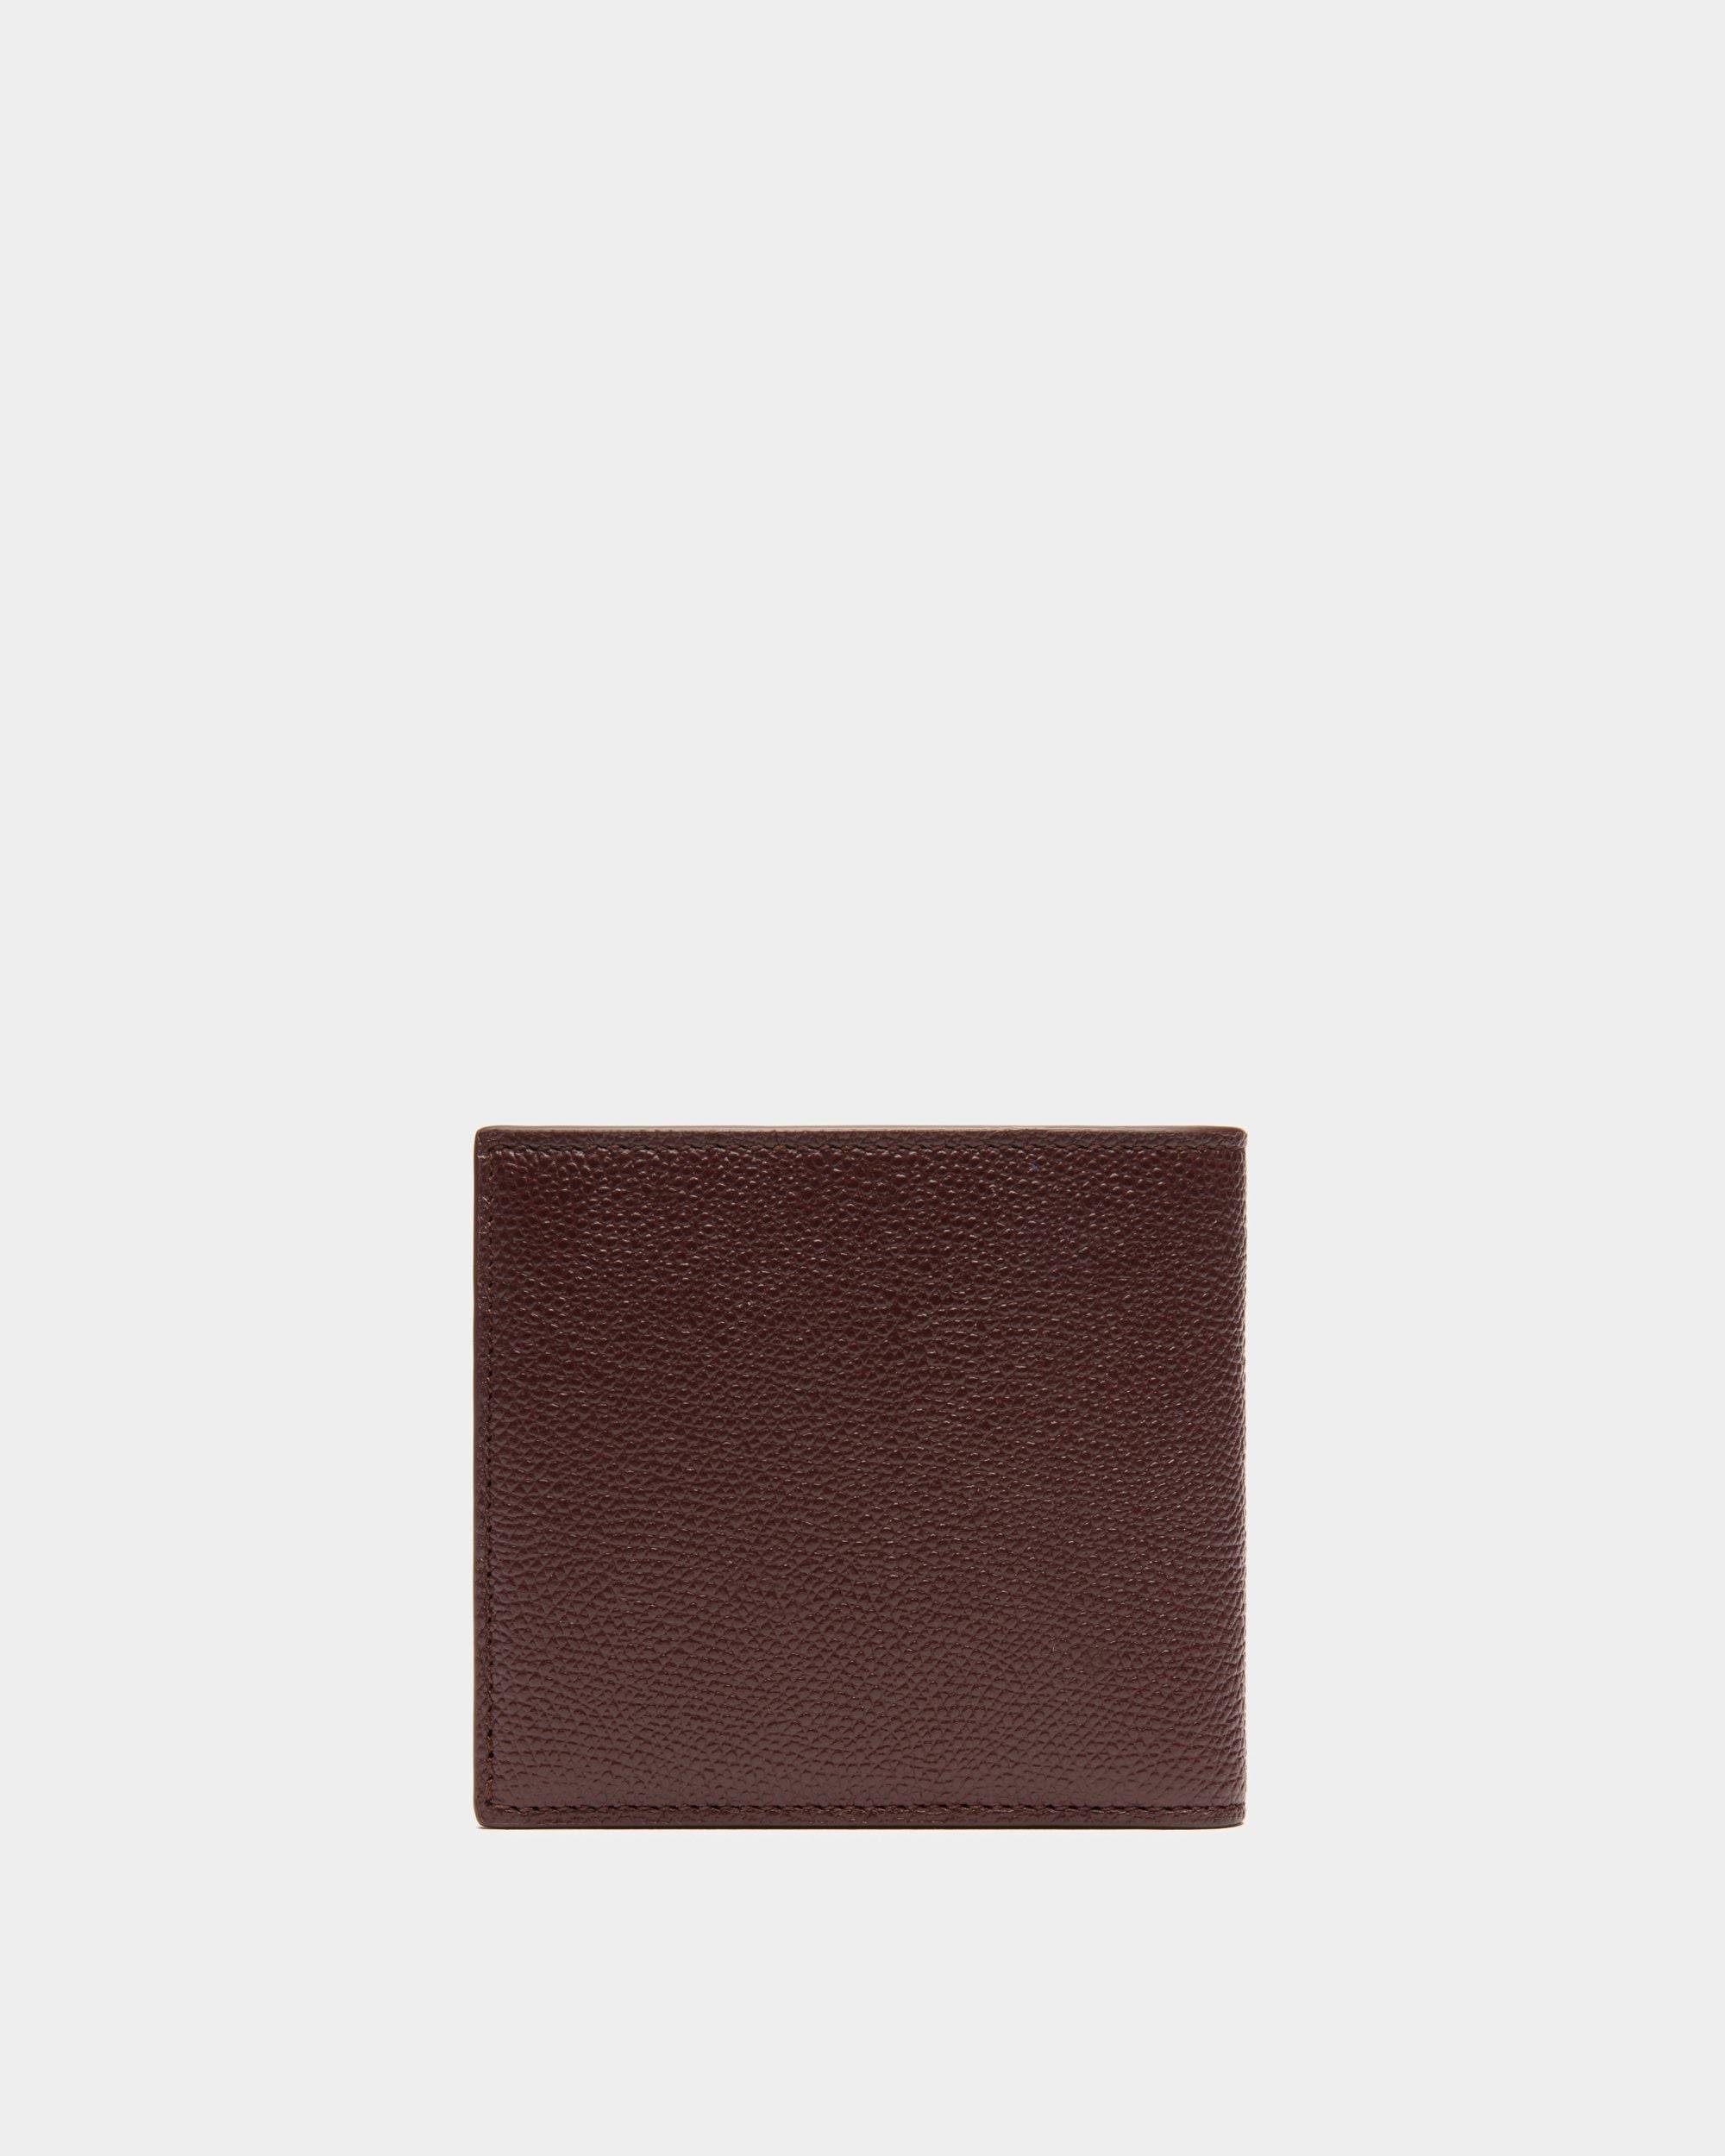 Flag | Men's Bifold Wallet in Chestnut Brown Grained Leather | Bally | Still Life Back